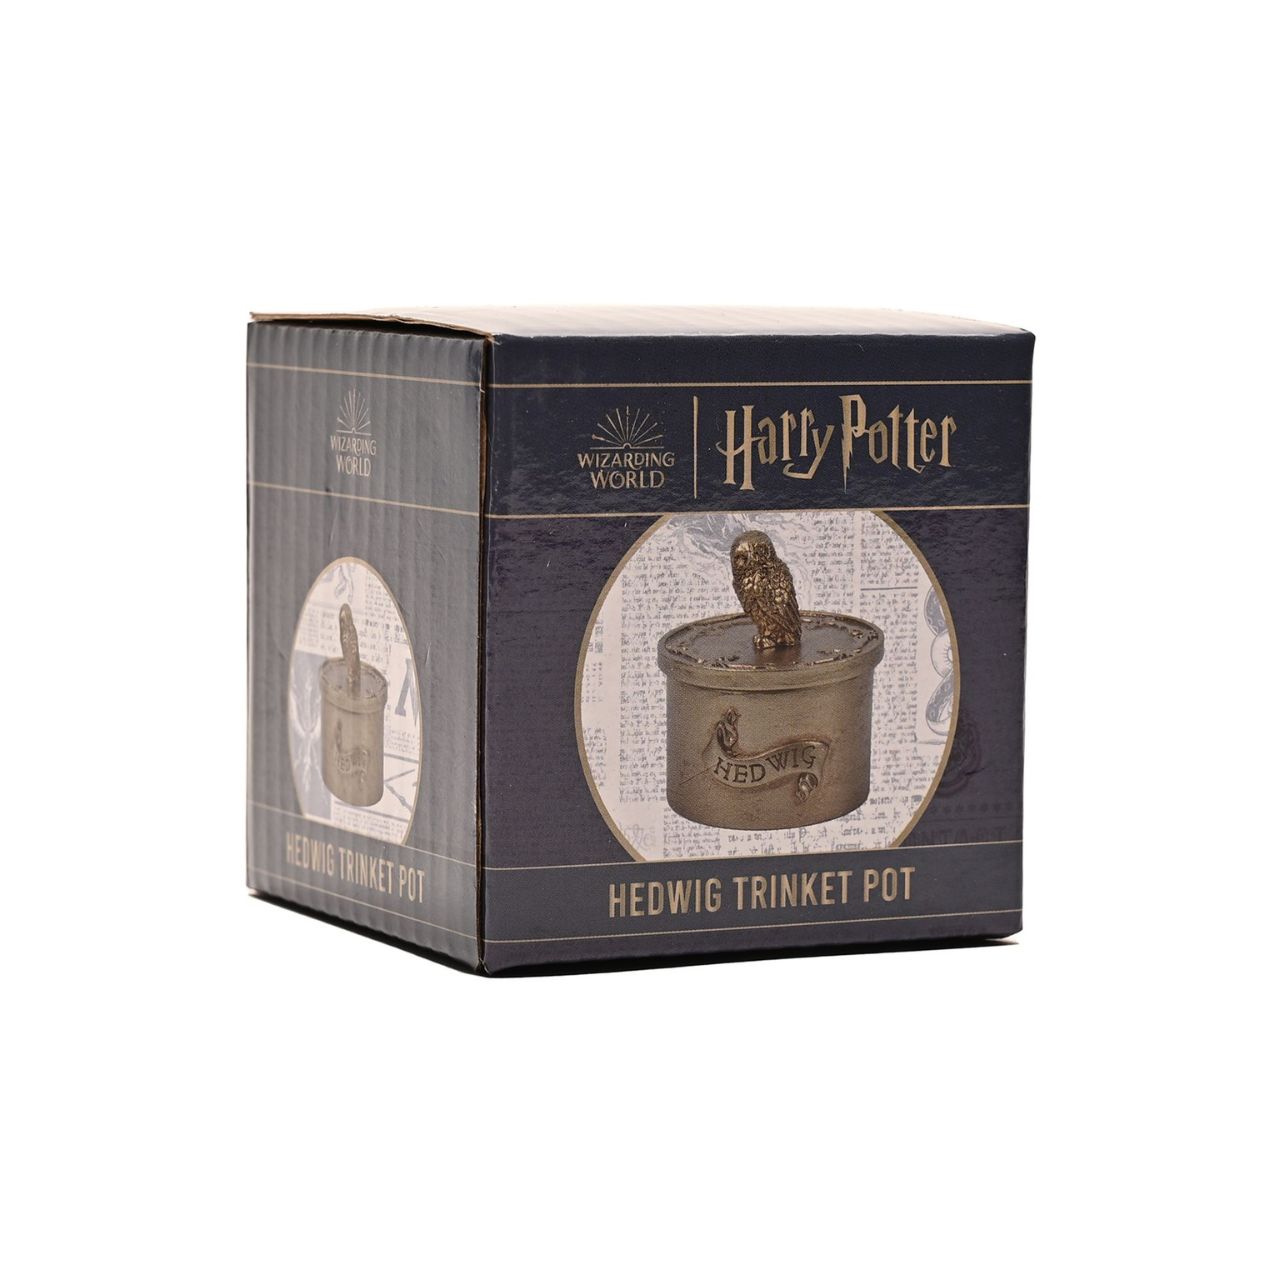 Warner Bros Harry Potter Alumni Trinket Box Hedwig  Harry Potter Alumni Trinket Box Hedwig  A Hedwig trinket box by HARRY POTTER®.  This spellbinding trinket box is adorned Hedwig the Owl and filled with Hogwarts magic.